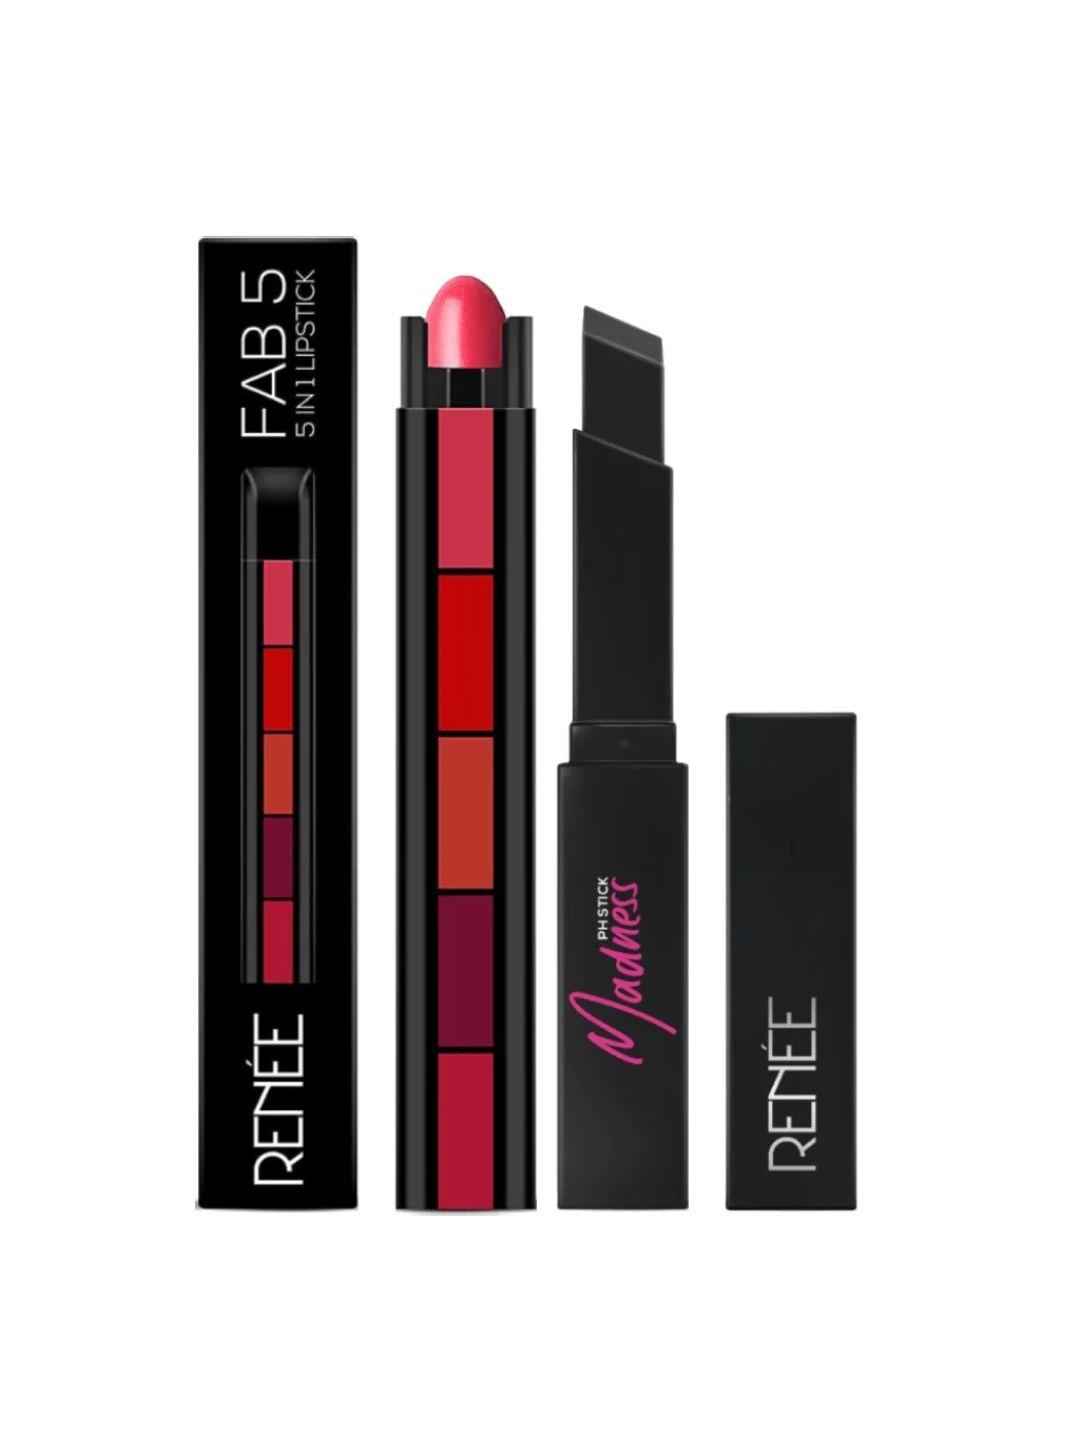 renee set of 2 fab 5 5-in-1 lipstick 10.5gm